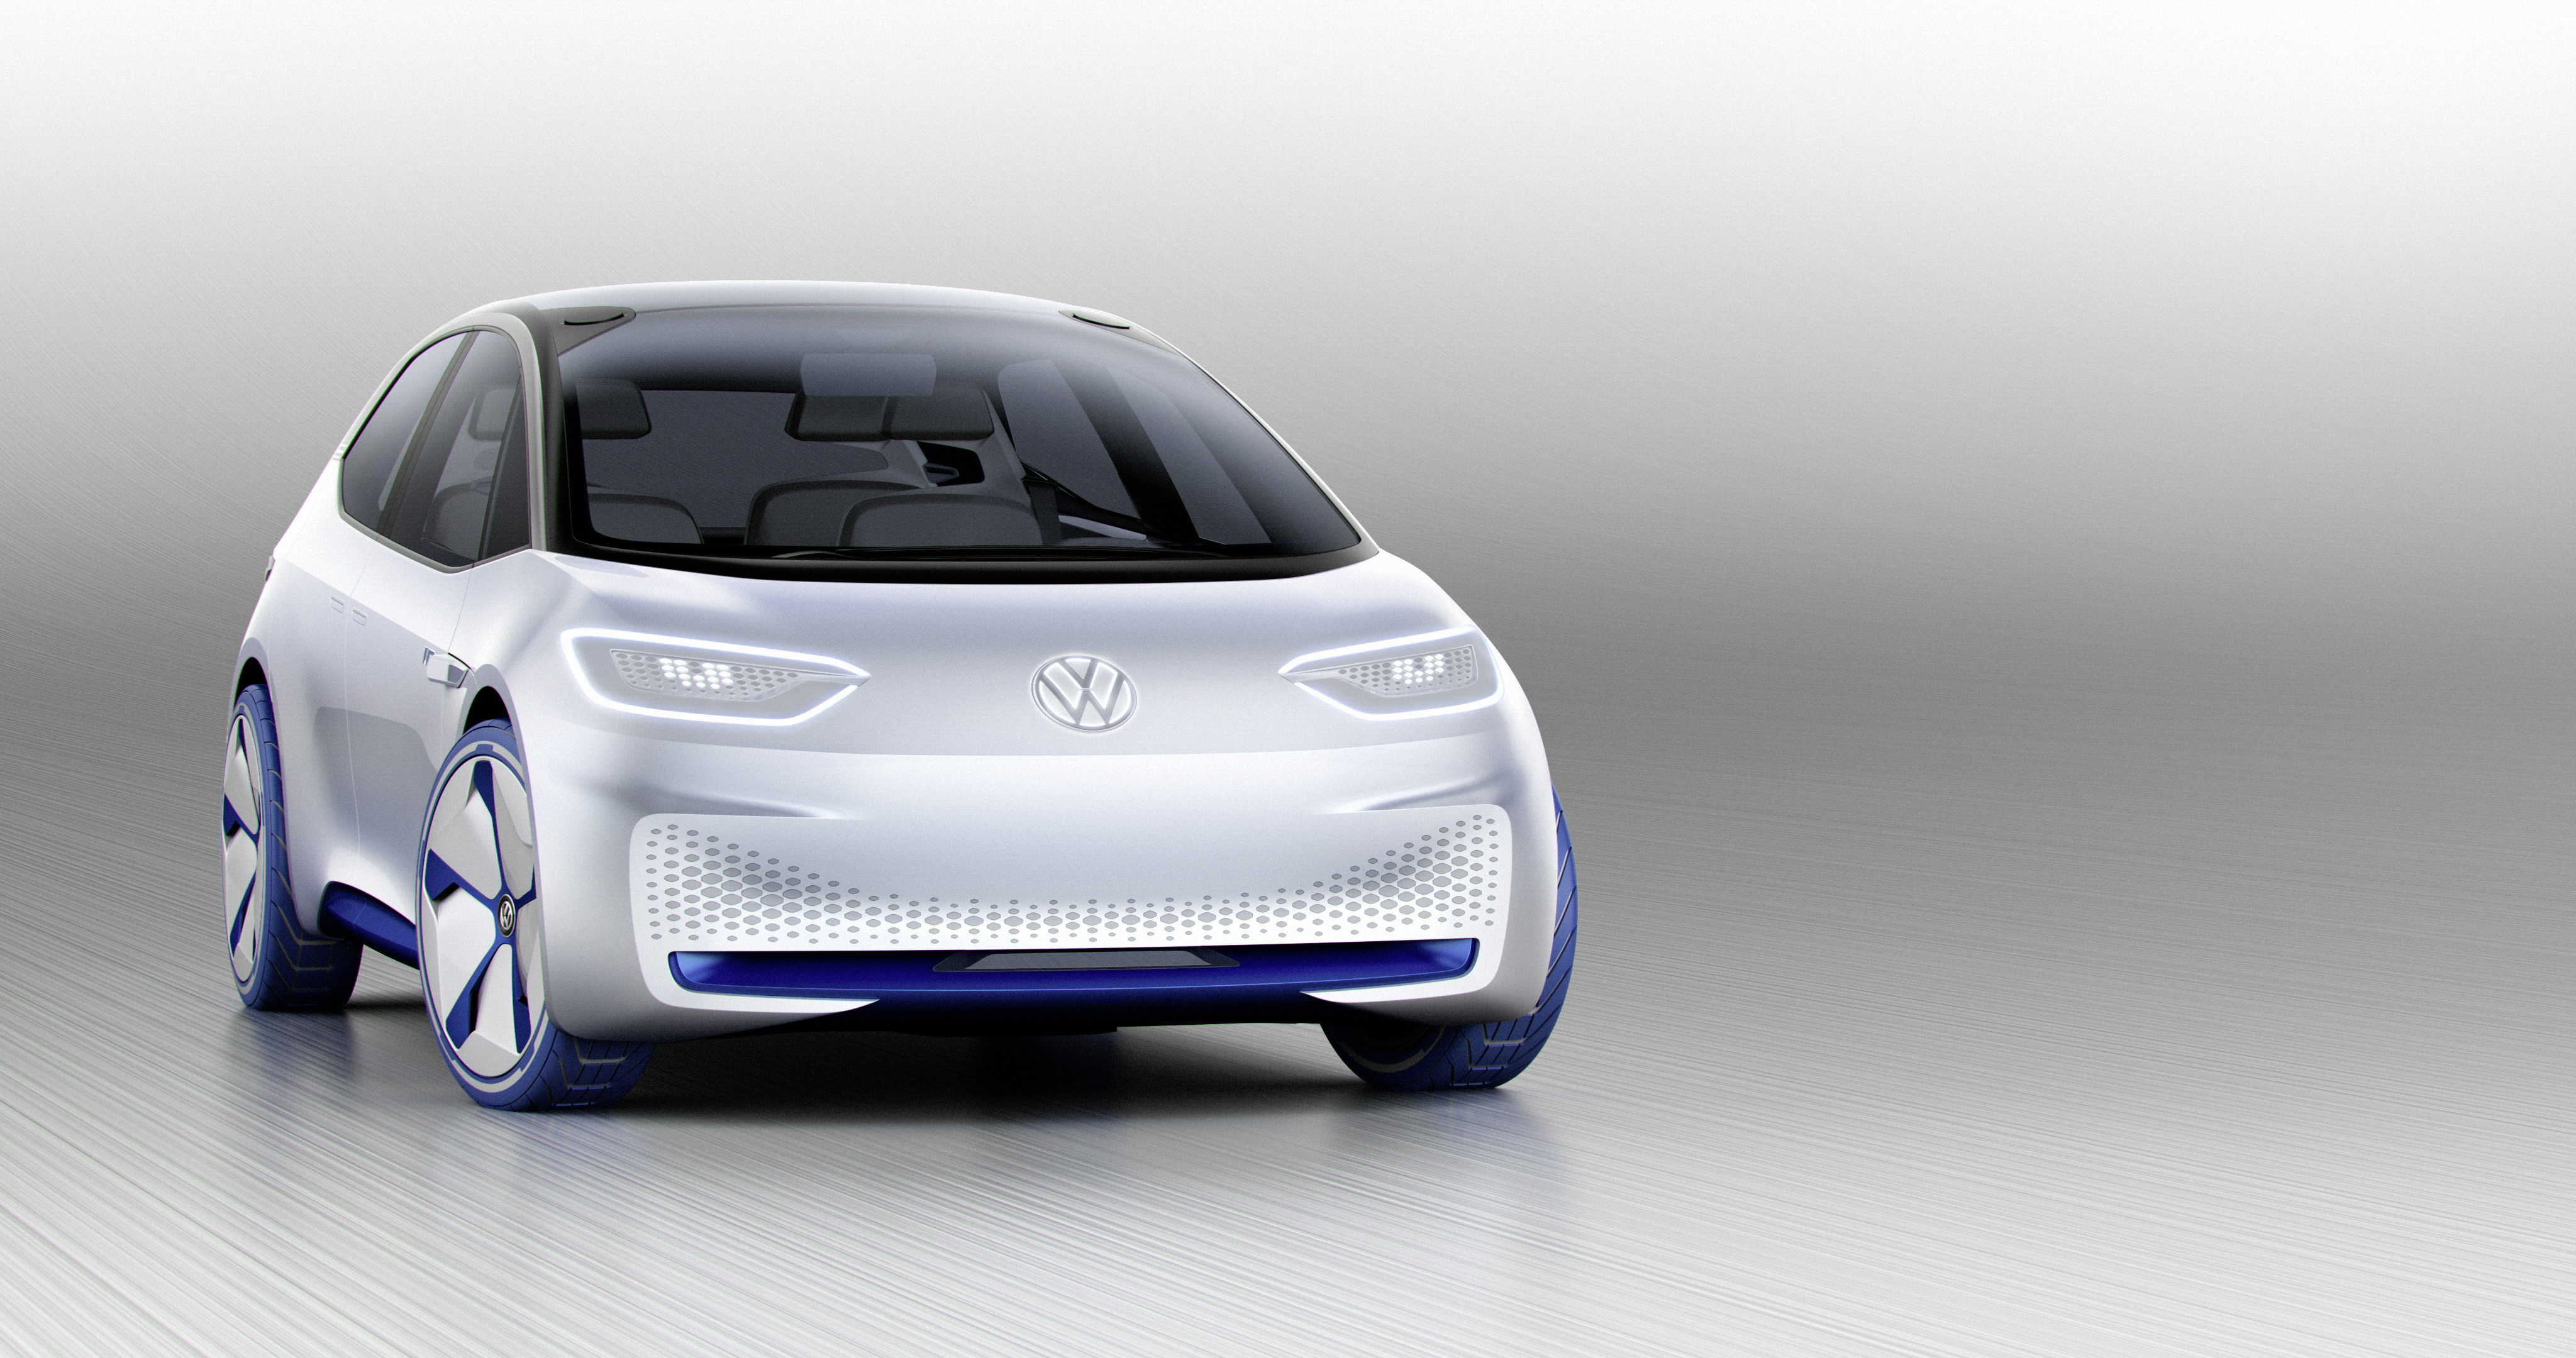 Volkswagen Concept Backgrounds, Compatible - PC, Mobile, Gadgets| 4096x2160 px